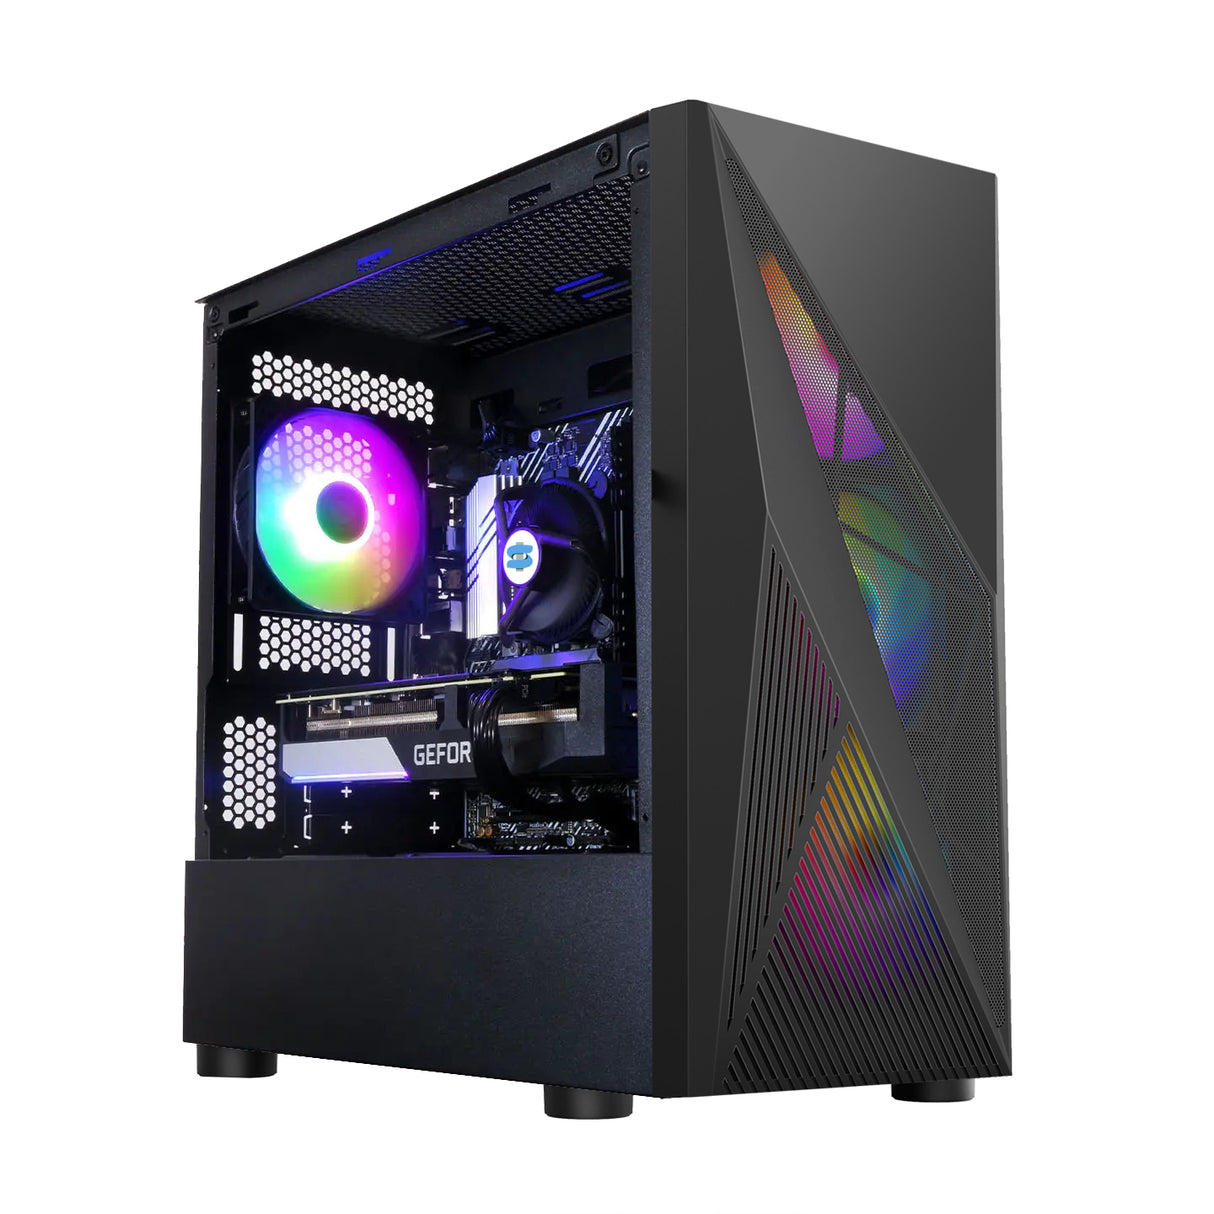 Beginners Fast Gaming PC | AMD Ryzen 5 4500 Processor | 16GB RAM | 512GB SSD | NVIDIA GTX 1650 Graphics Card